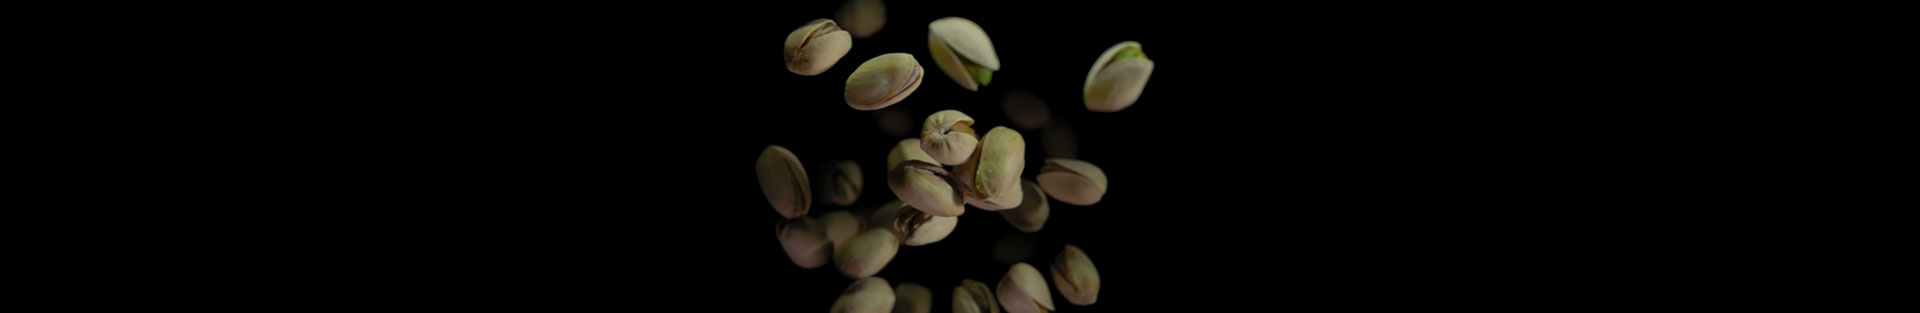 pistachio-sorter-cover